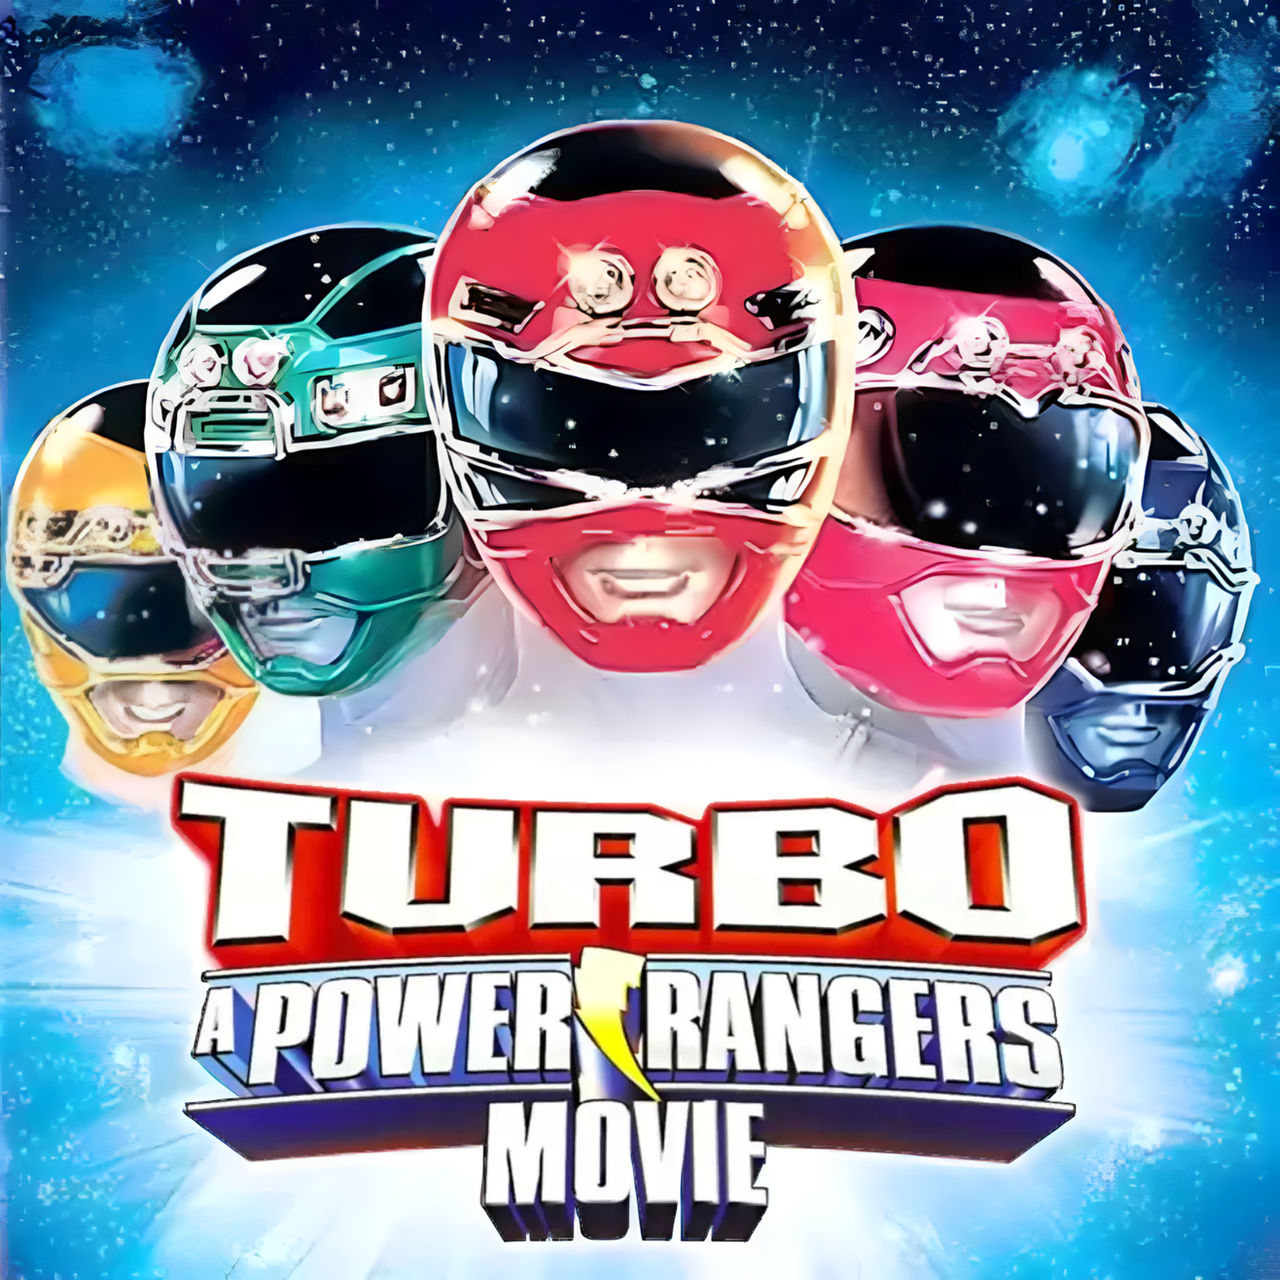 Turbo: A Power Rangers Movie Soundtrack by MychalRobert on DeviantArt